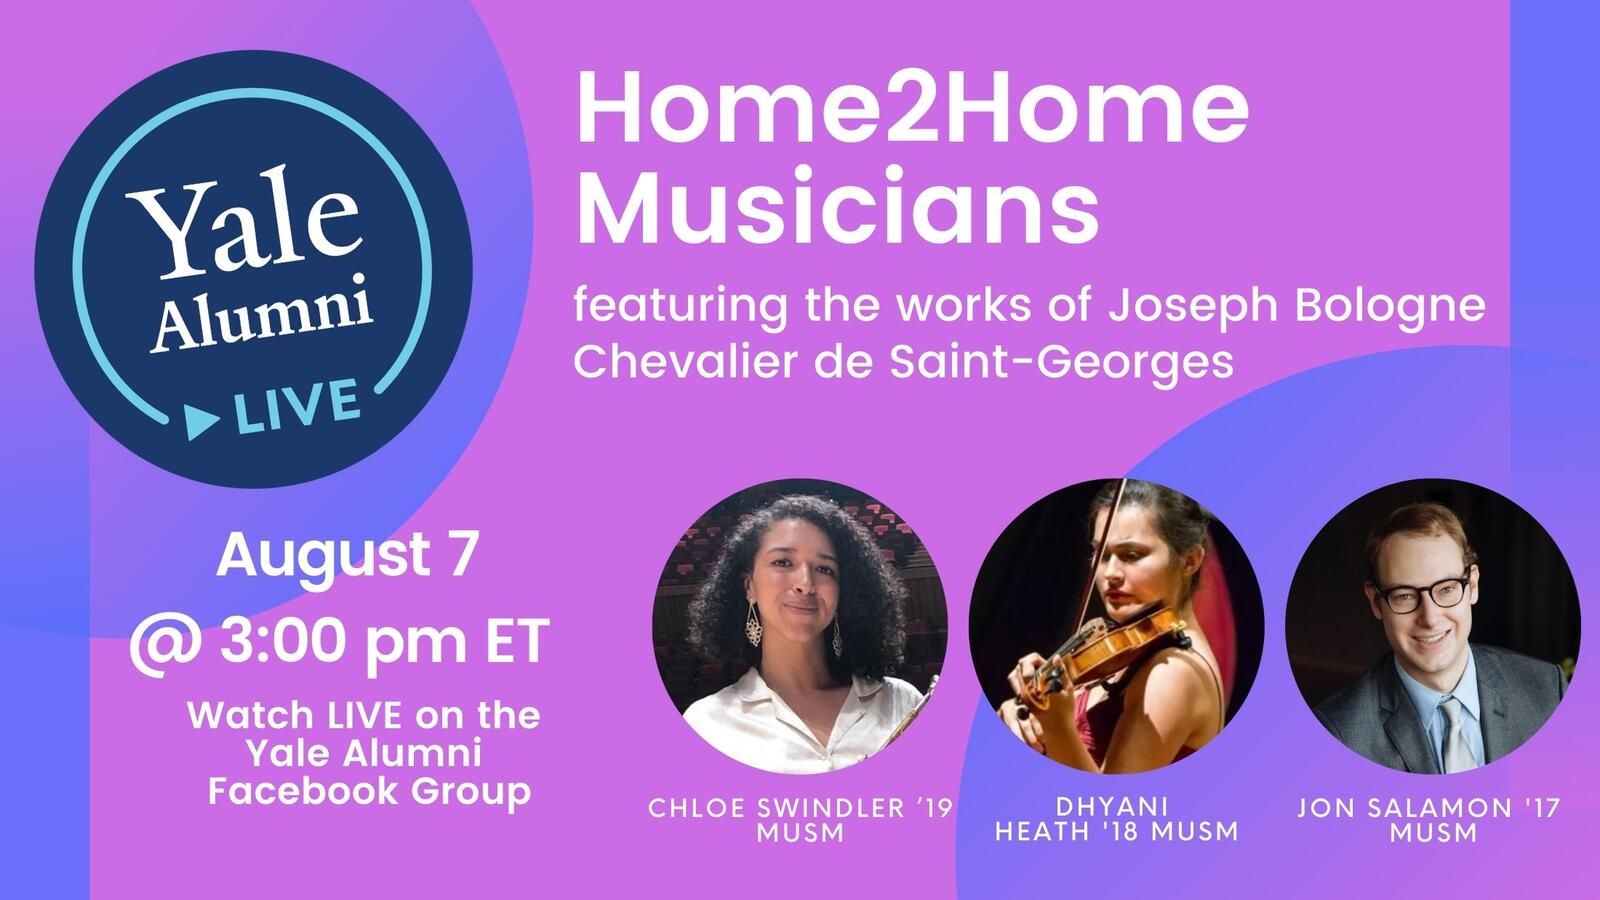 Yale Alumni LIVE: Home2Home Musicians